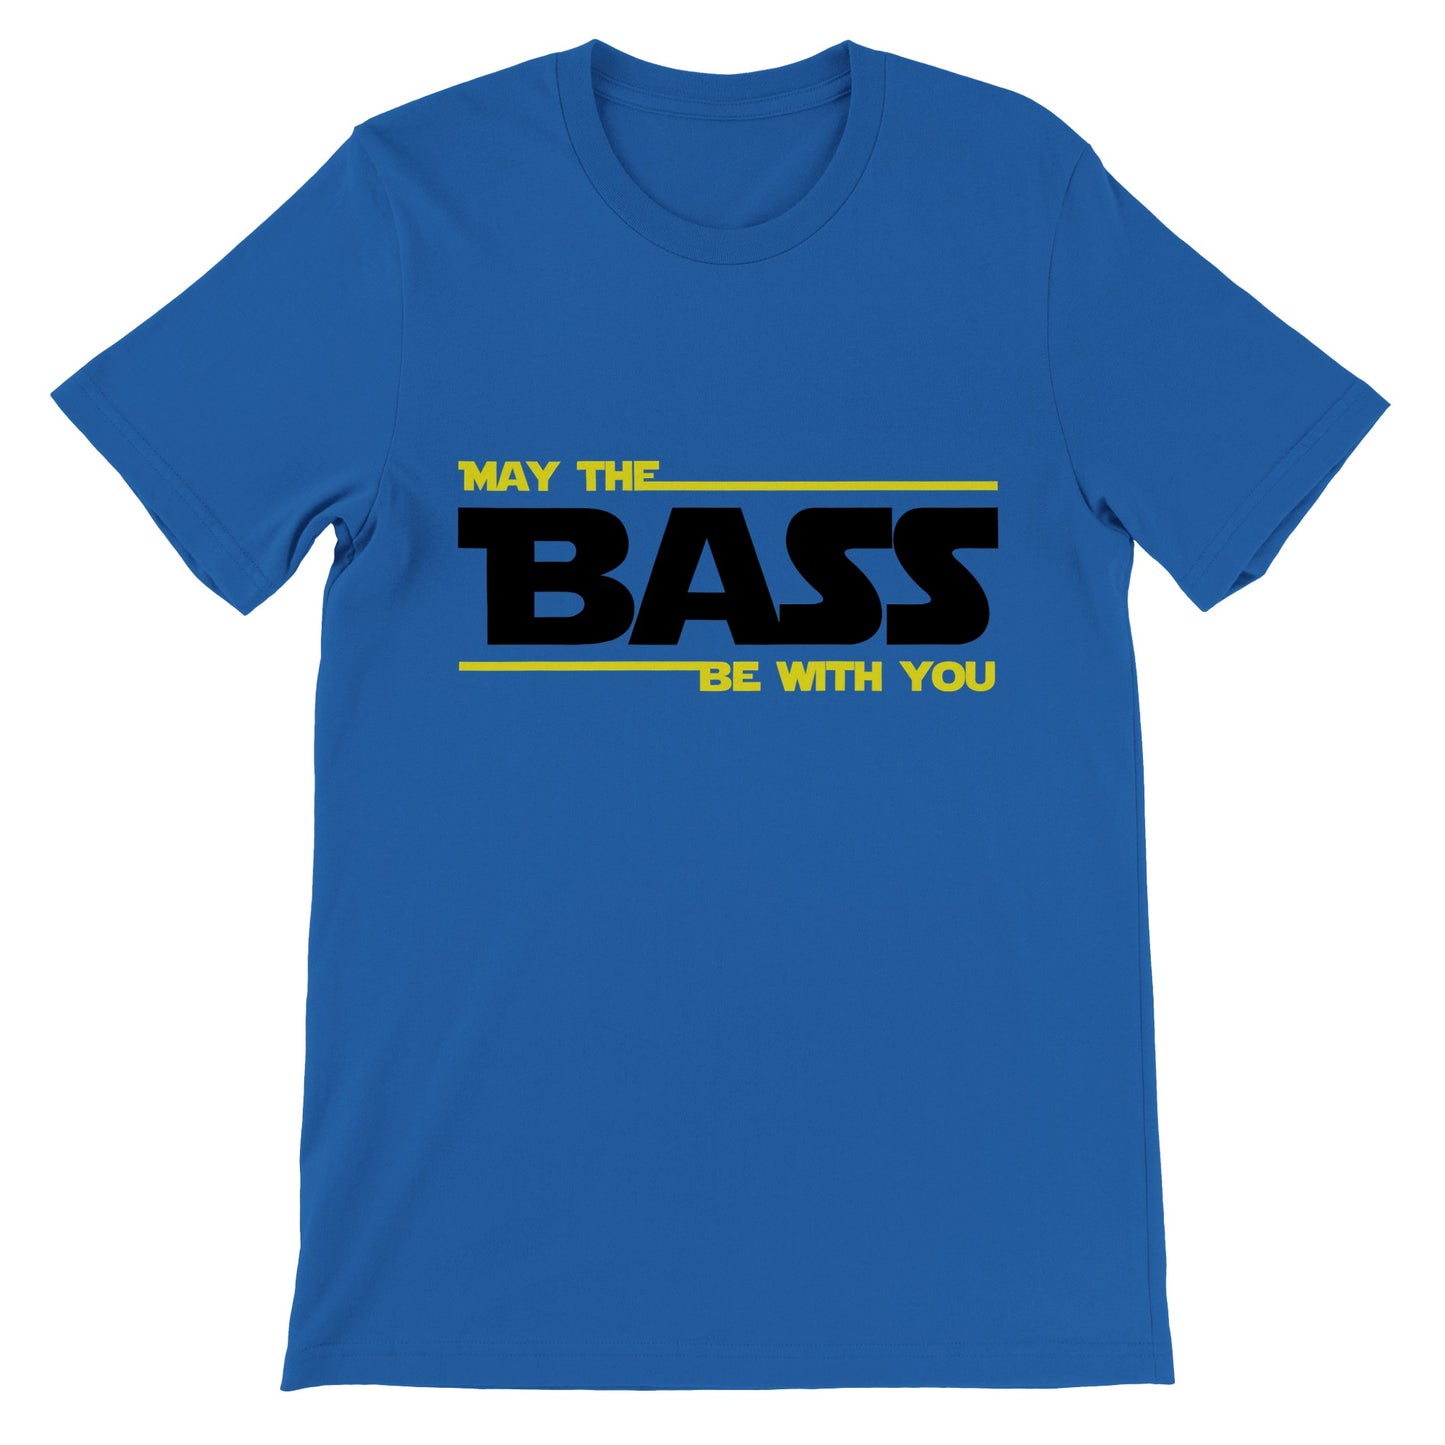 May the Bass be with you - Premium Männer / Unisex T-Shirt mit Rundhalsausschnitt